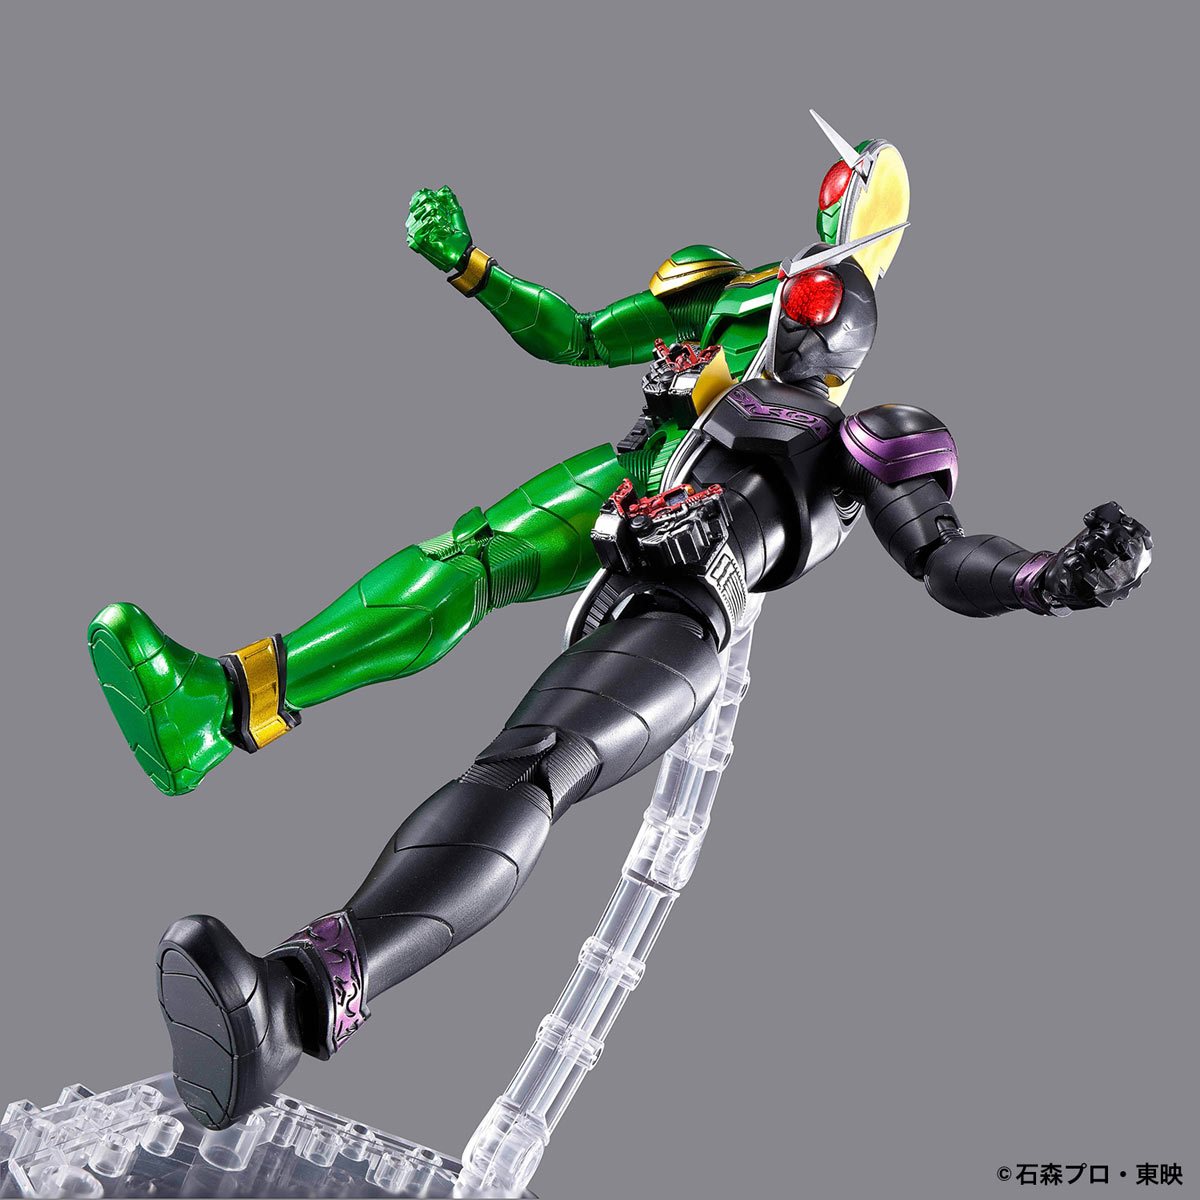 Figure-rise Standard Masked Kamen Rider Cyclone Joker